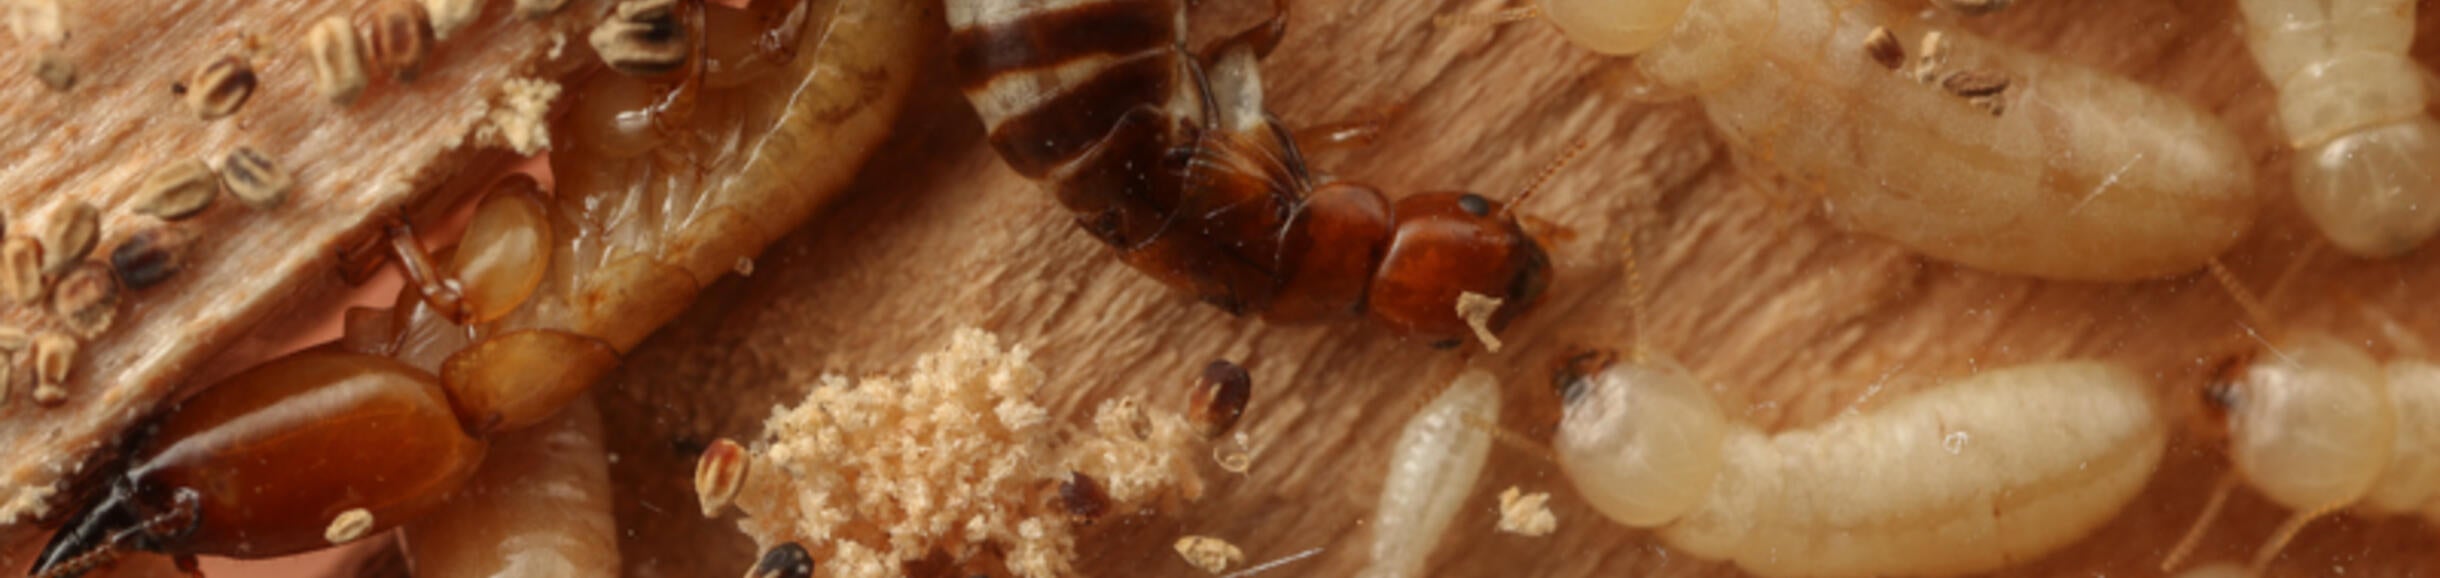 Western durwood termite colony